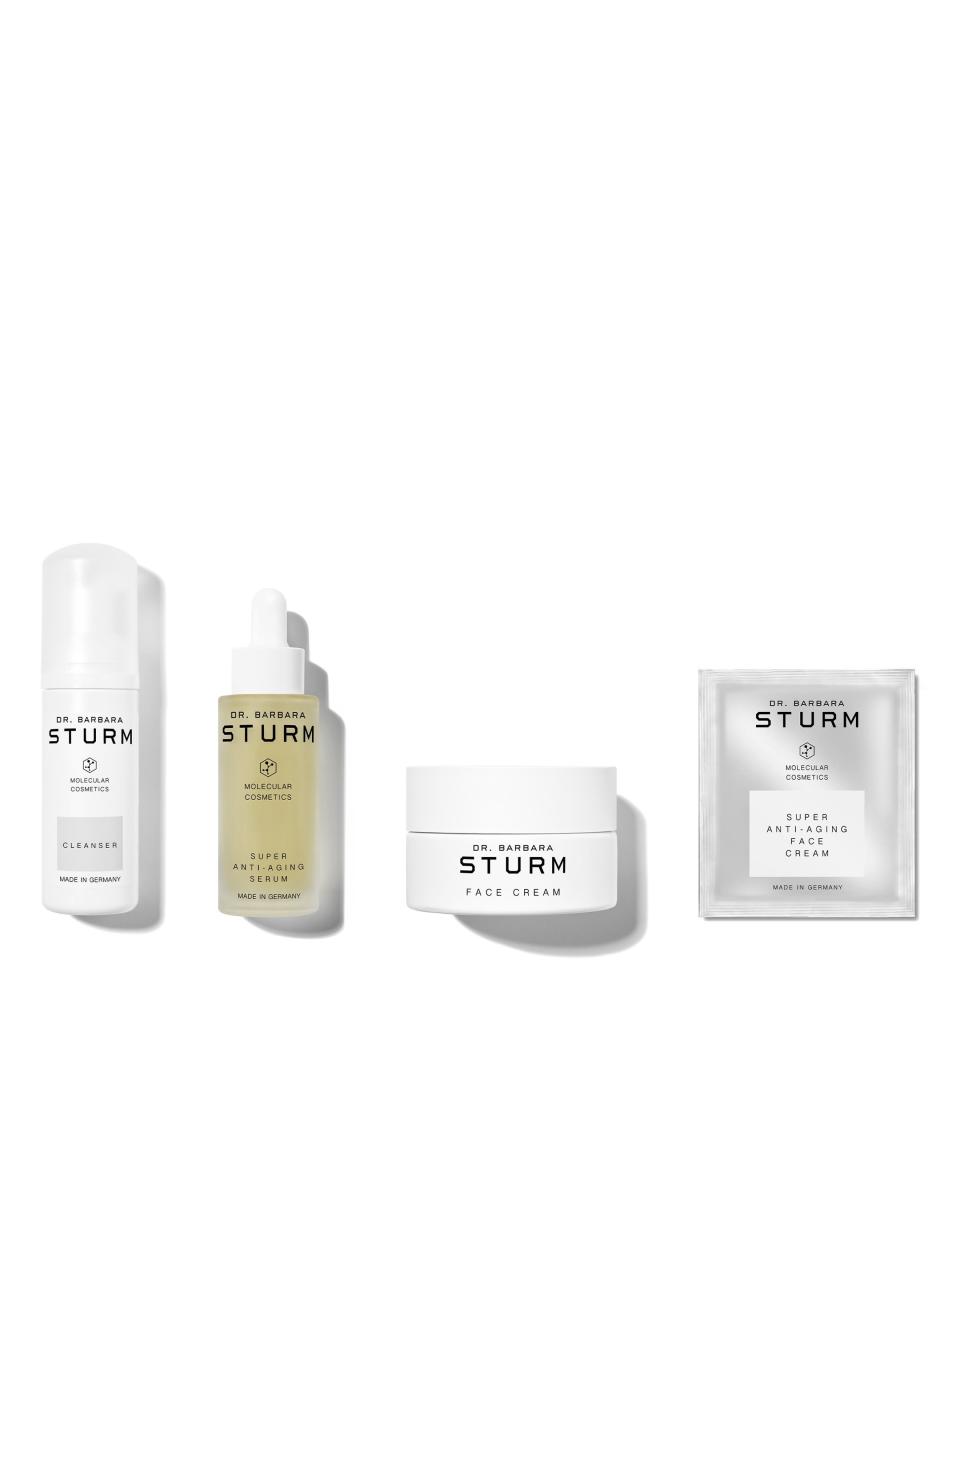 36) Super Anti-Aging Serum Skin Care Set ($455 Value)